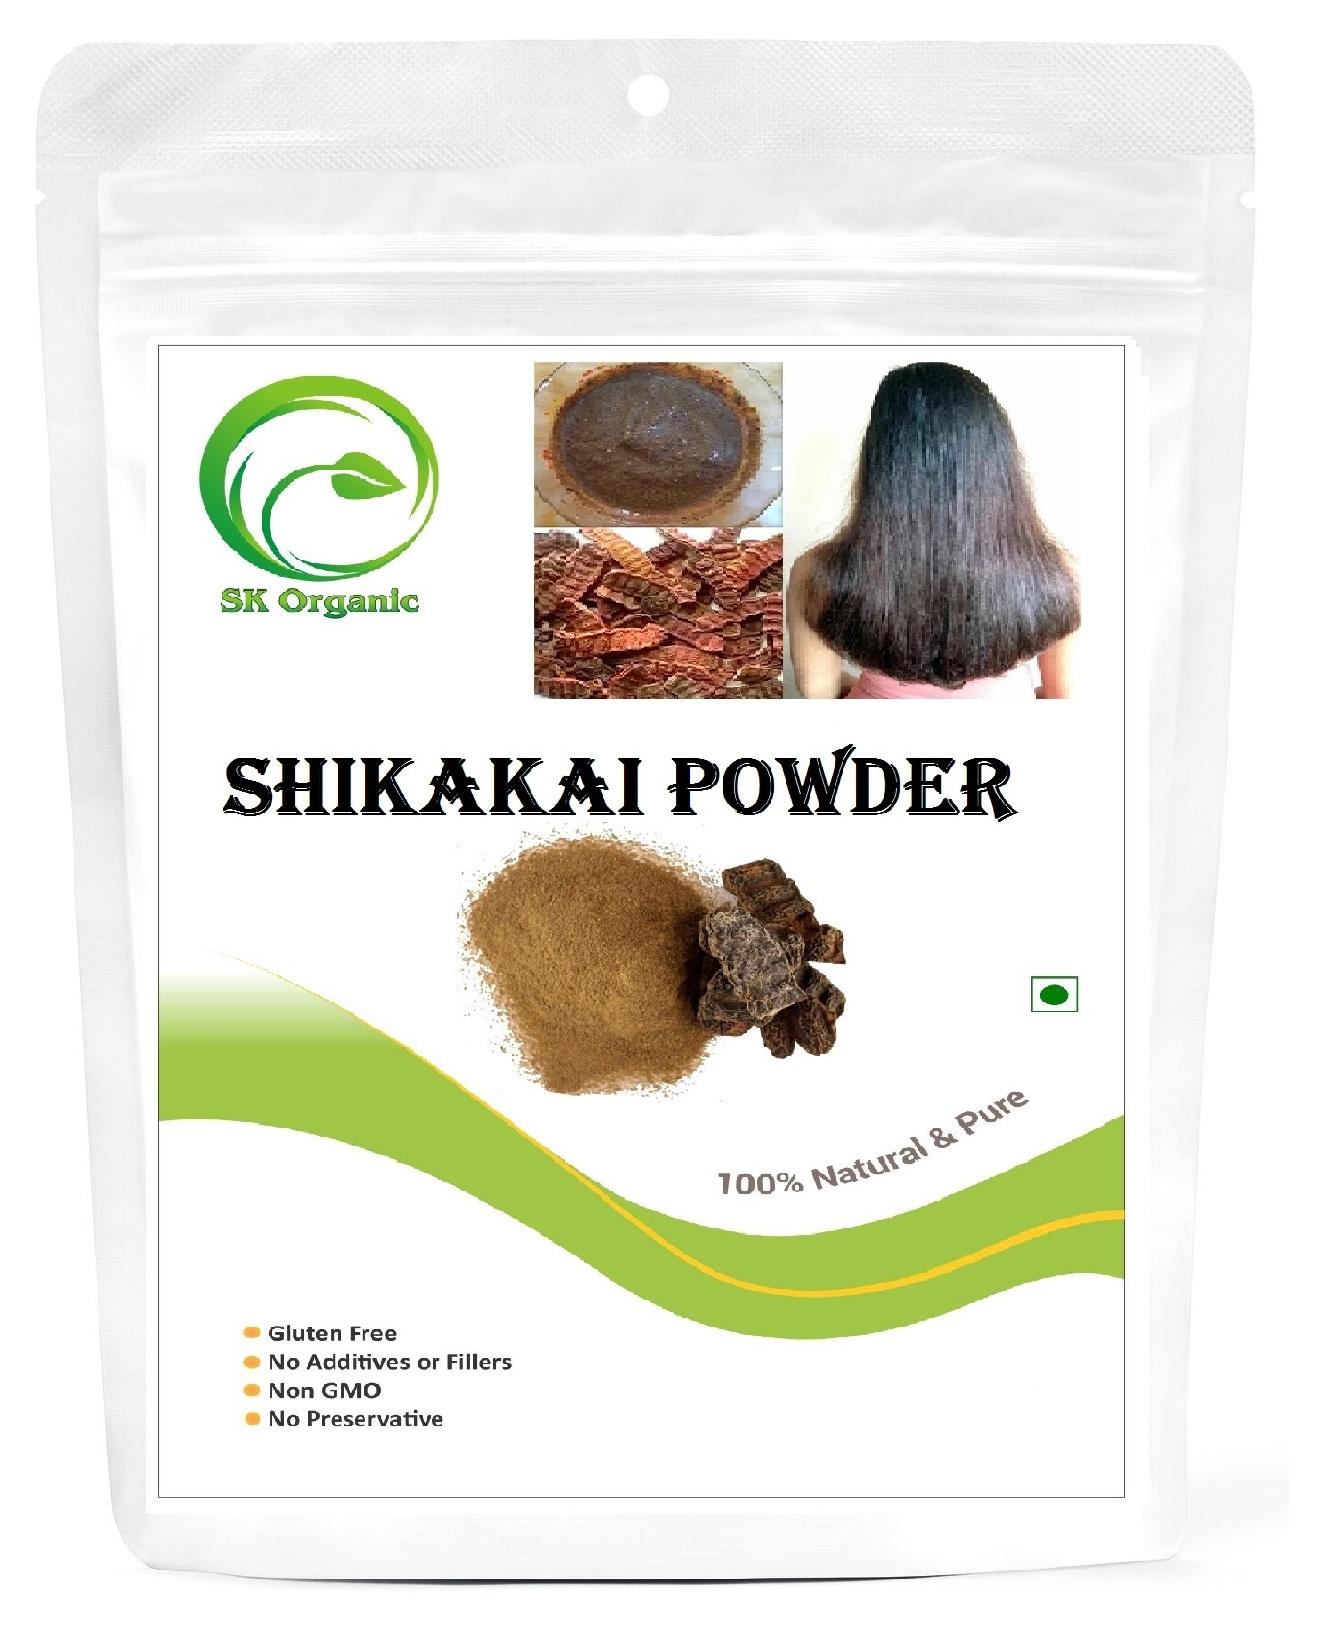 SK ORGANIC Shikakai Powder for healthy hair care